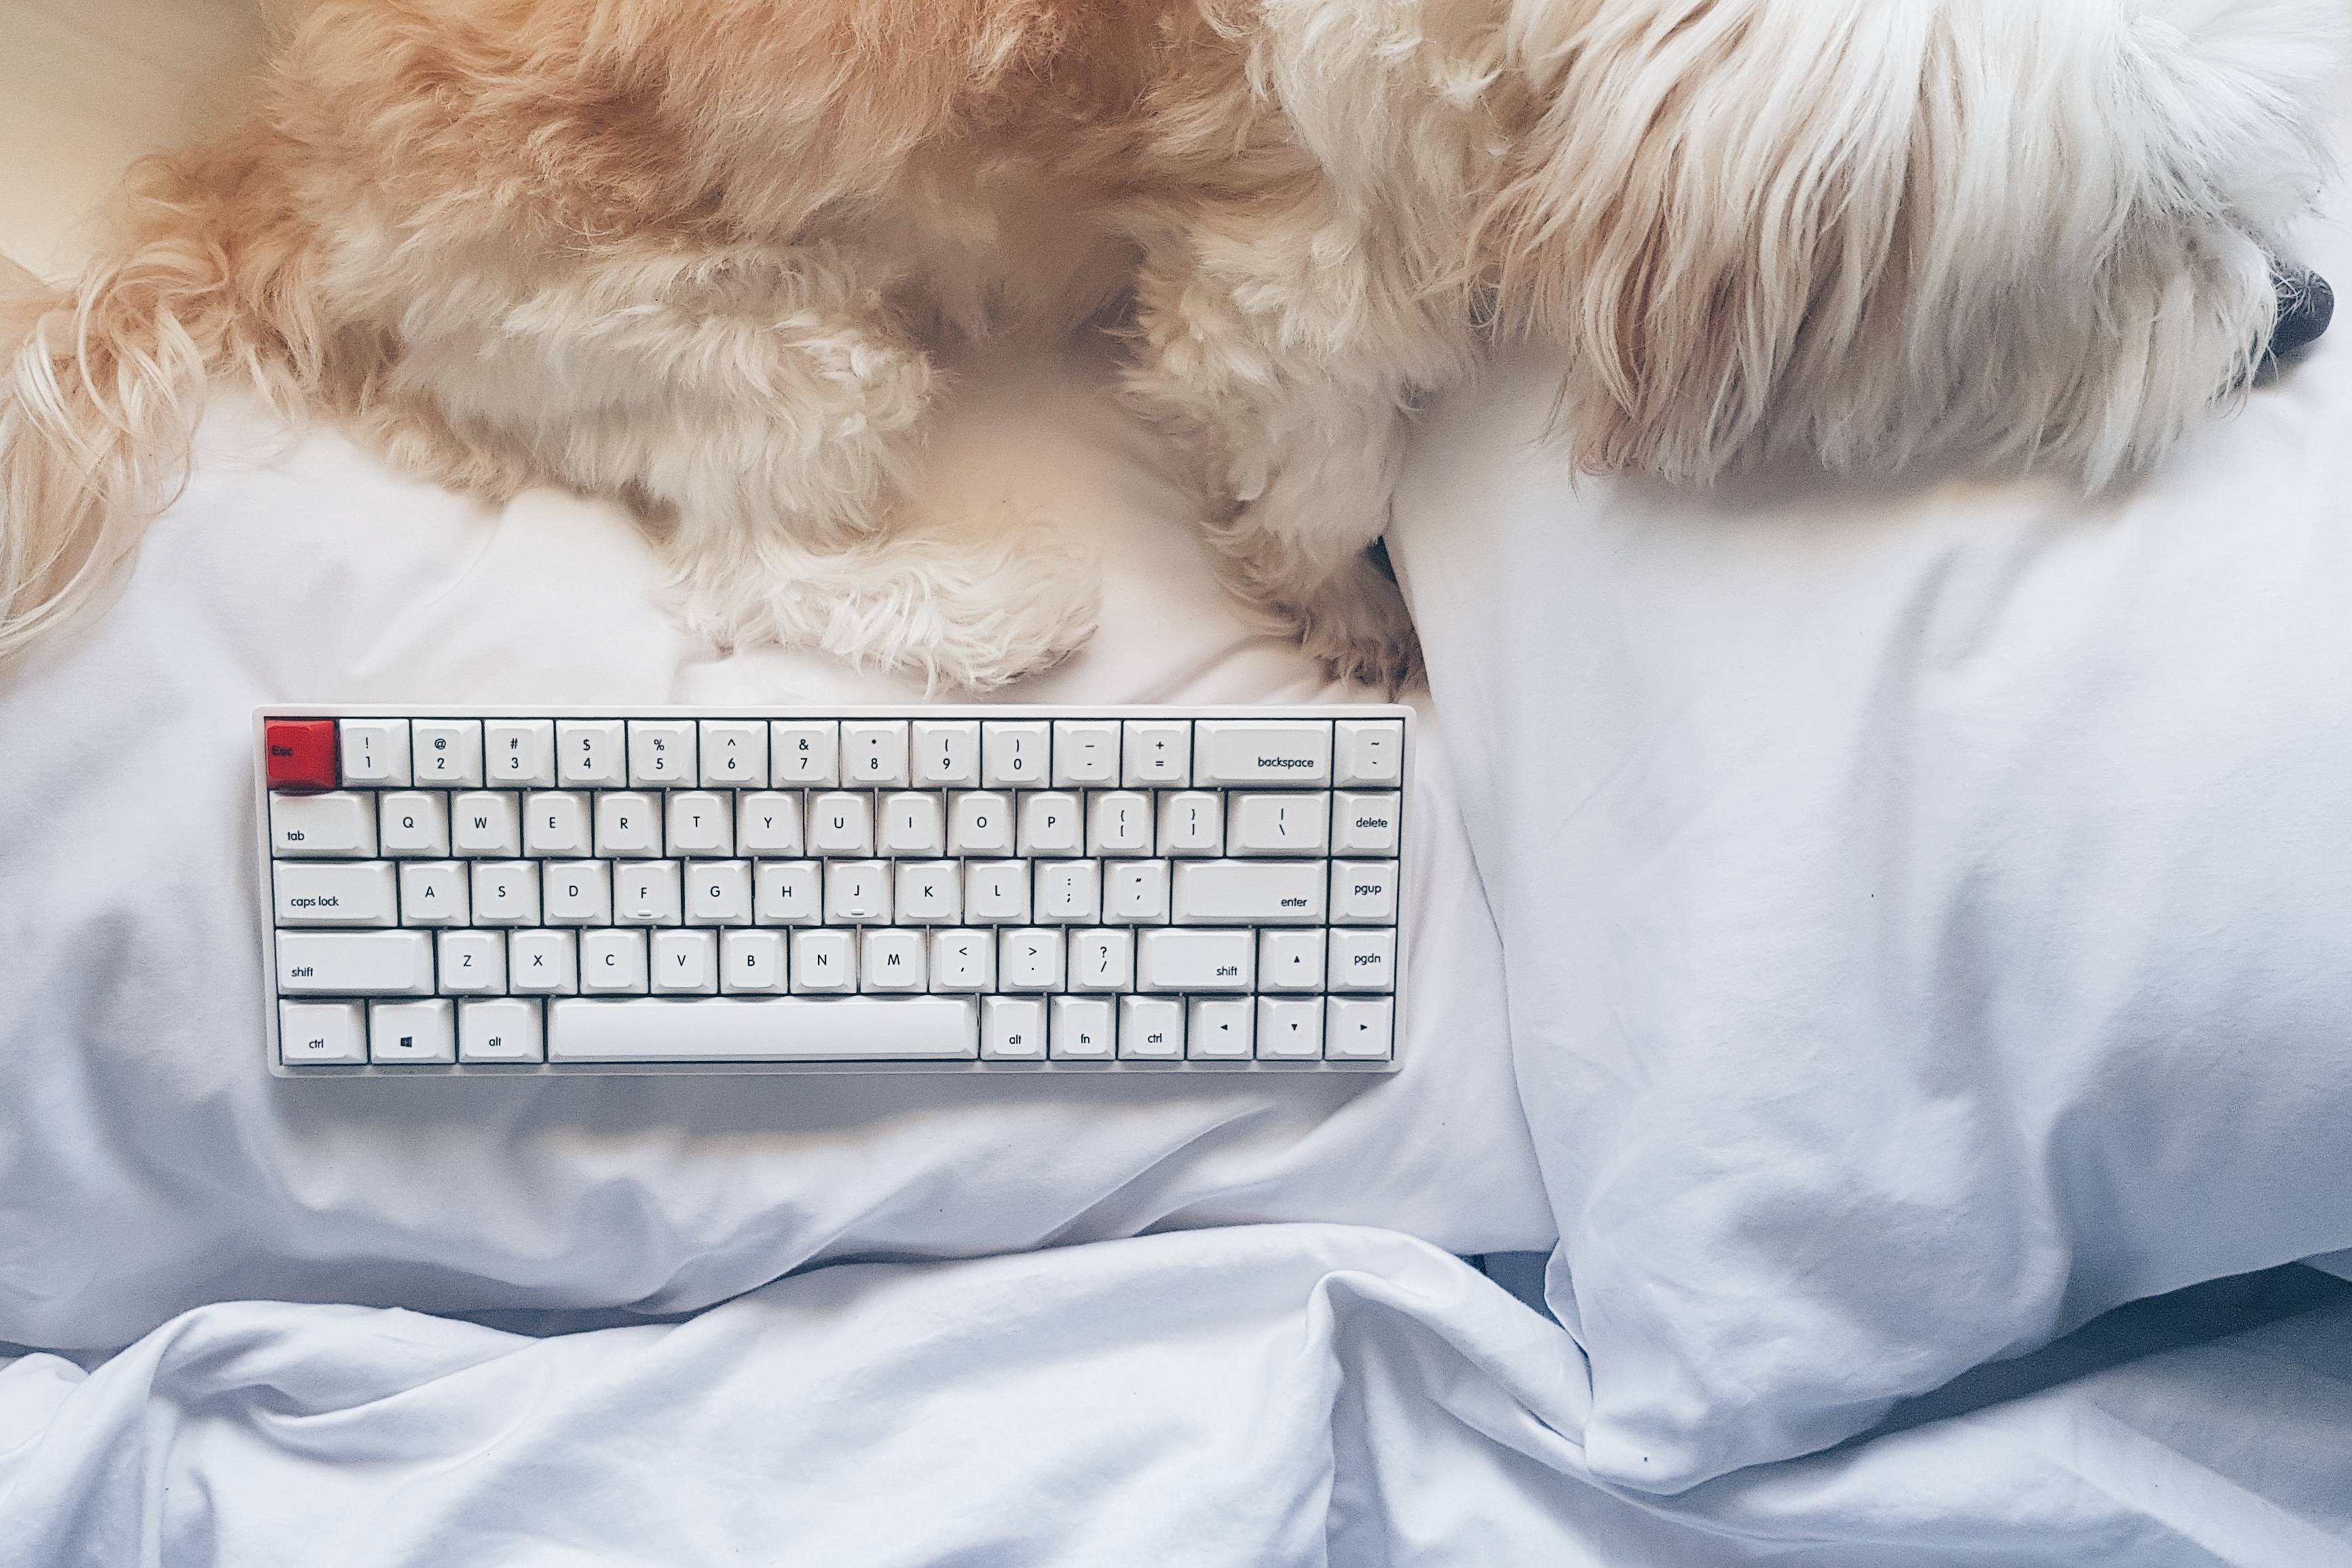 mechanical keyboard, Dog, Bed, Pillow, Cozy Wallpaper